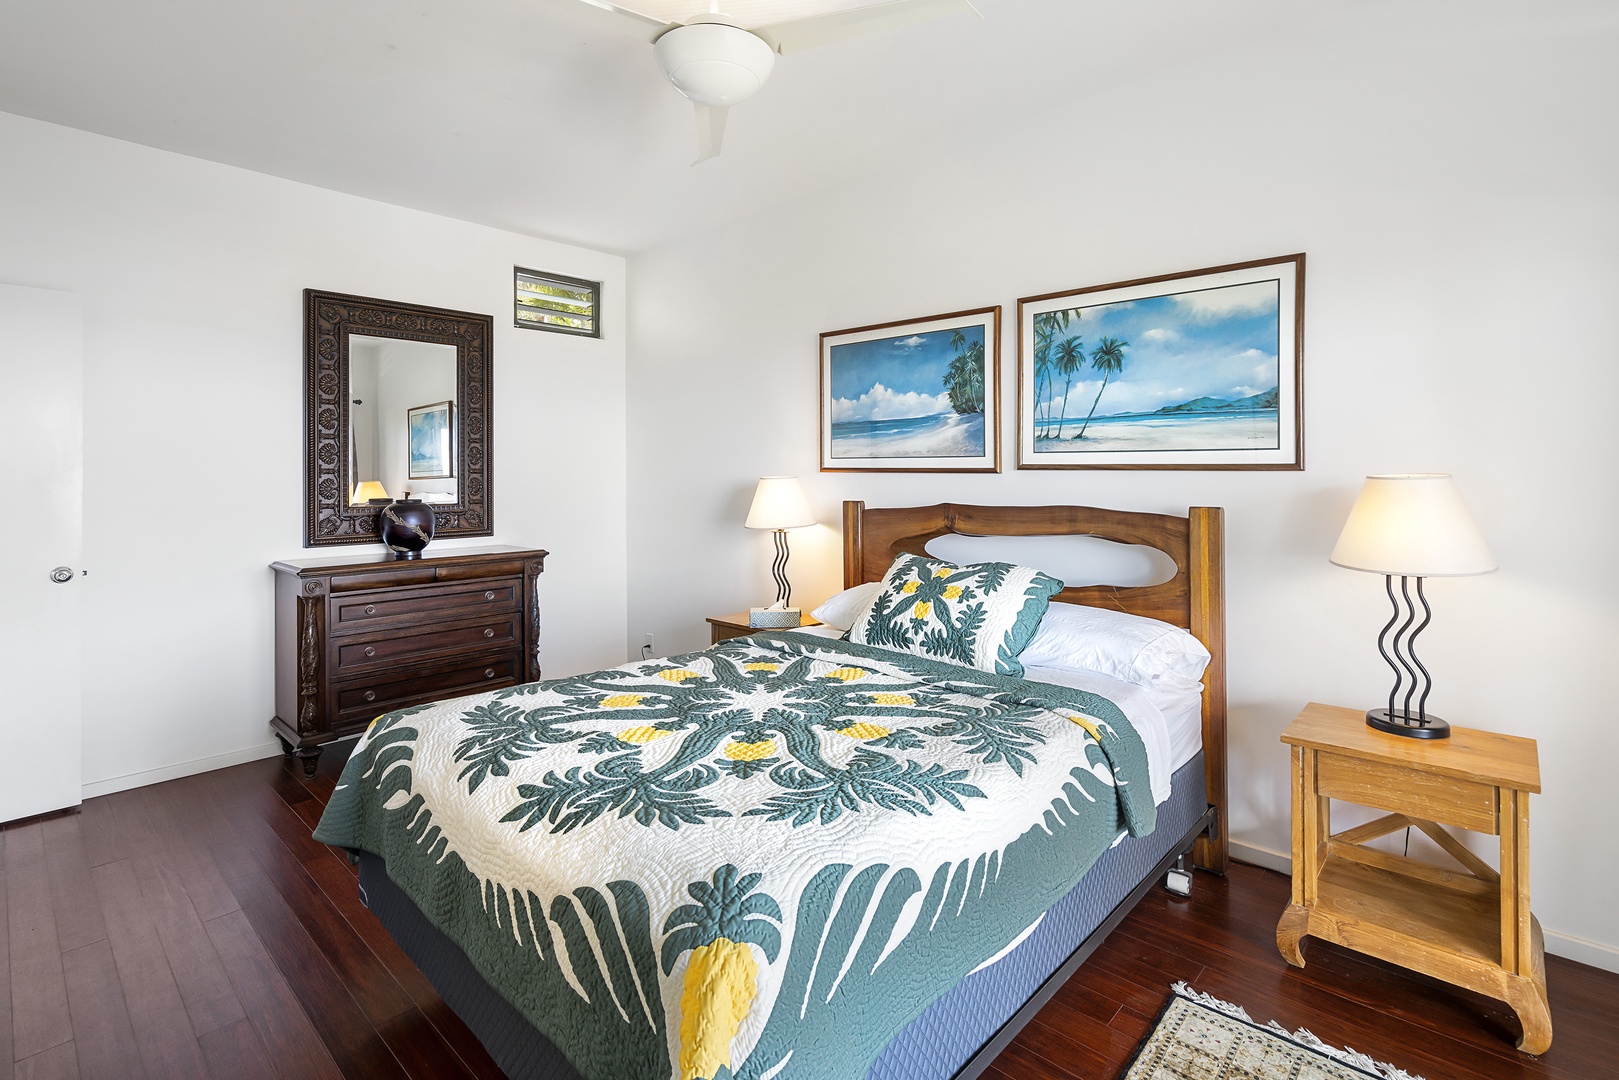 Kailua Kona Vacation Rentals, Ho'o Maluhia - Guest bedroom with Queen bed!